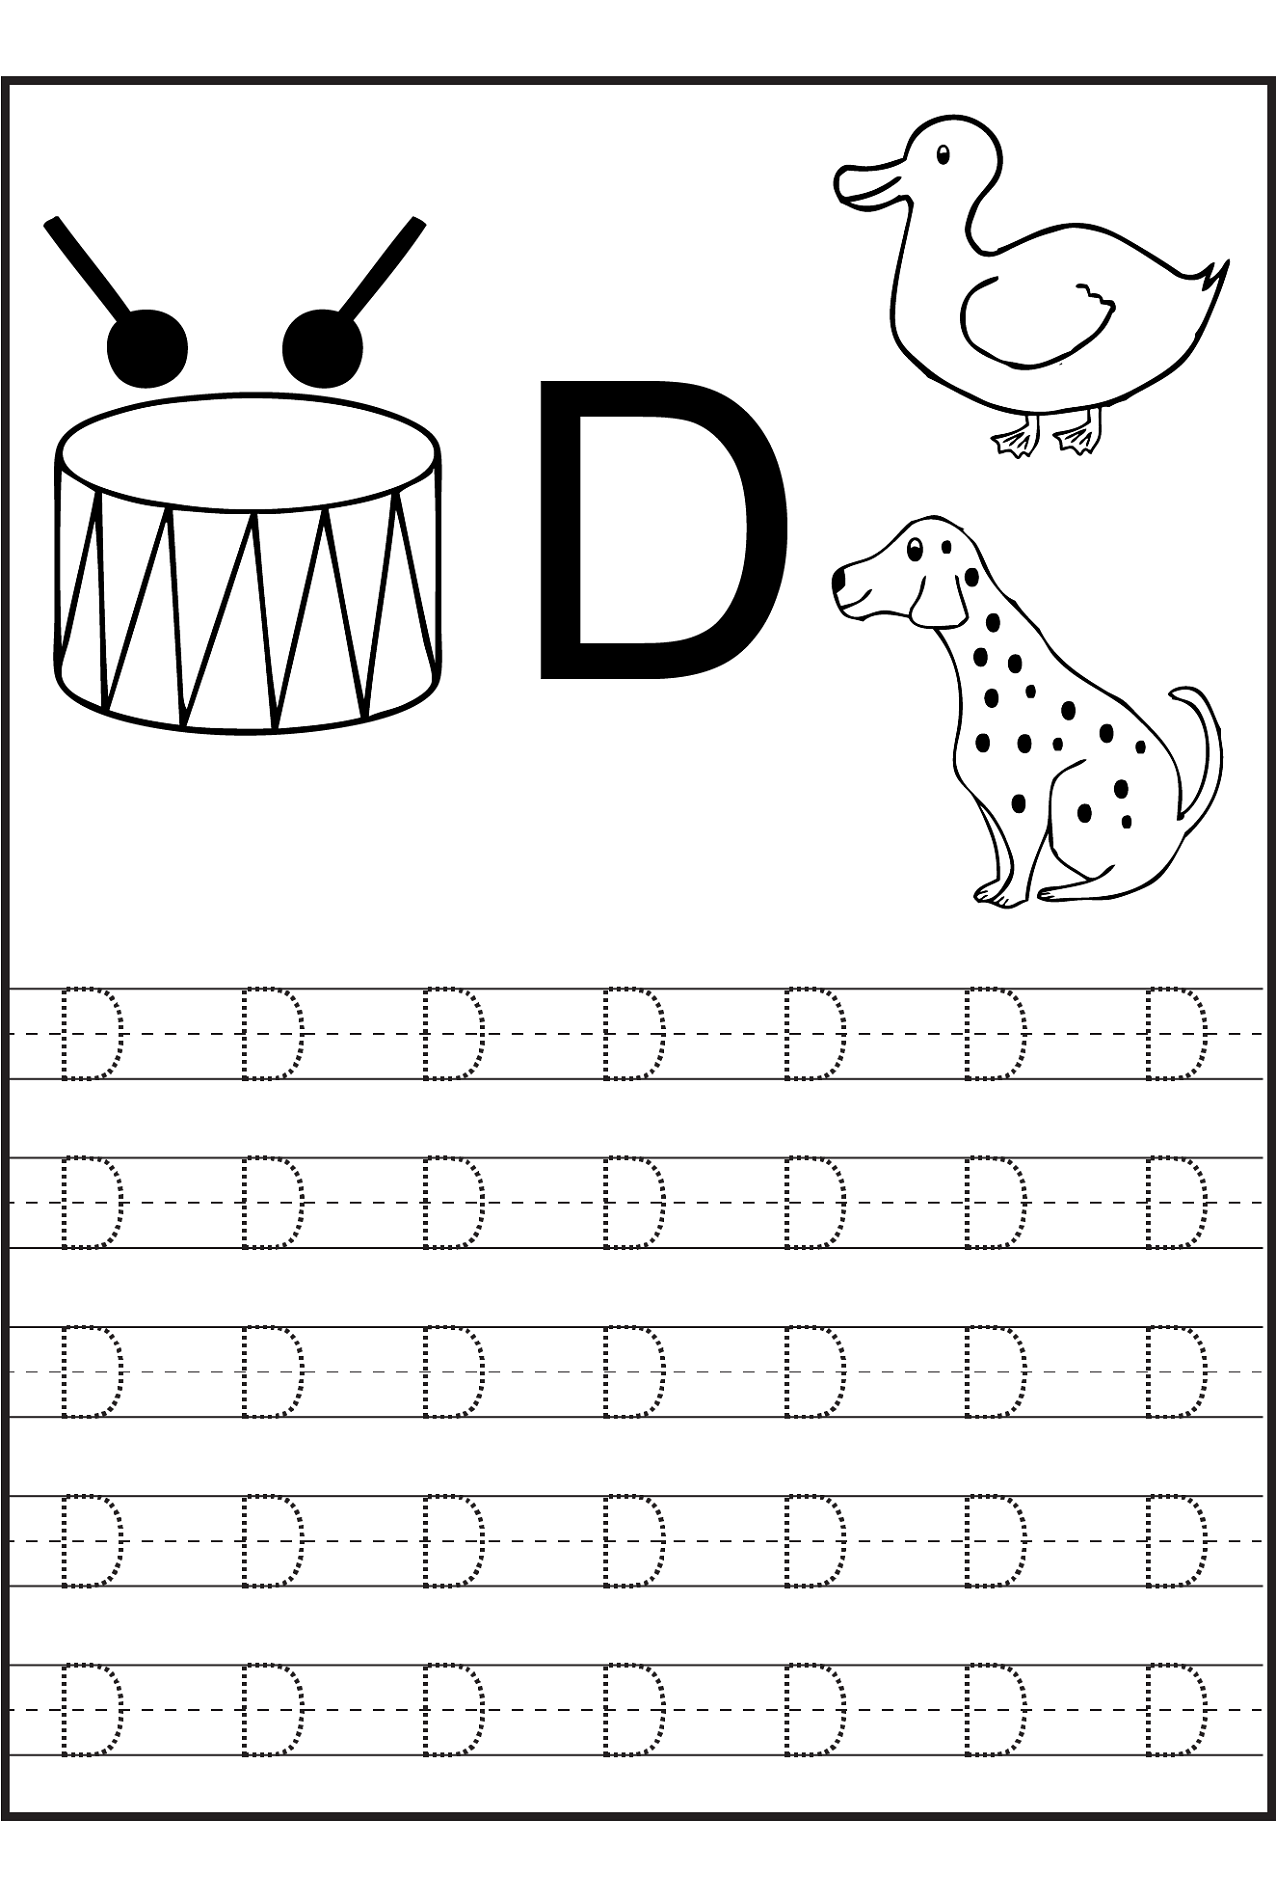 trace-letter-d-worksheets-activity-shelter-entire-cursive-alphabet-alphabetworksheetsfreecom